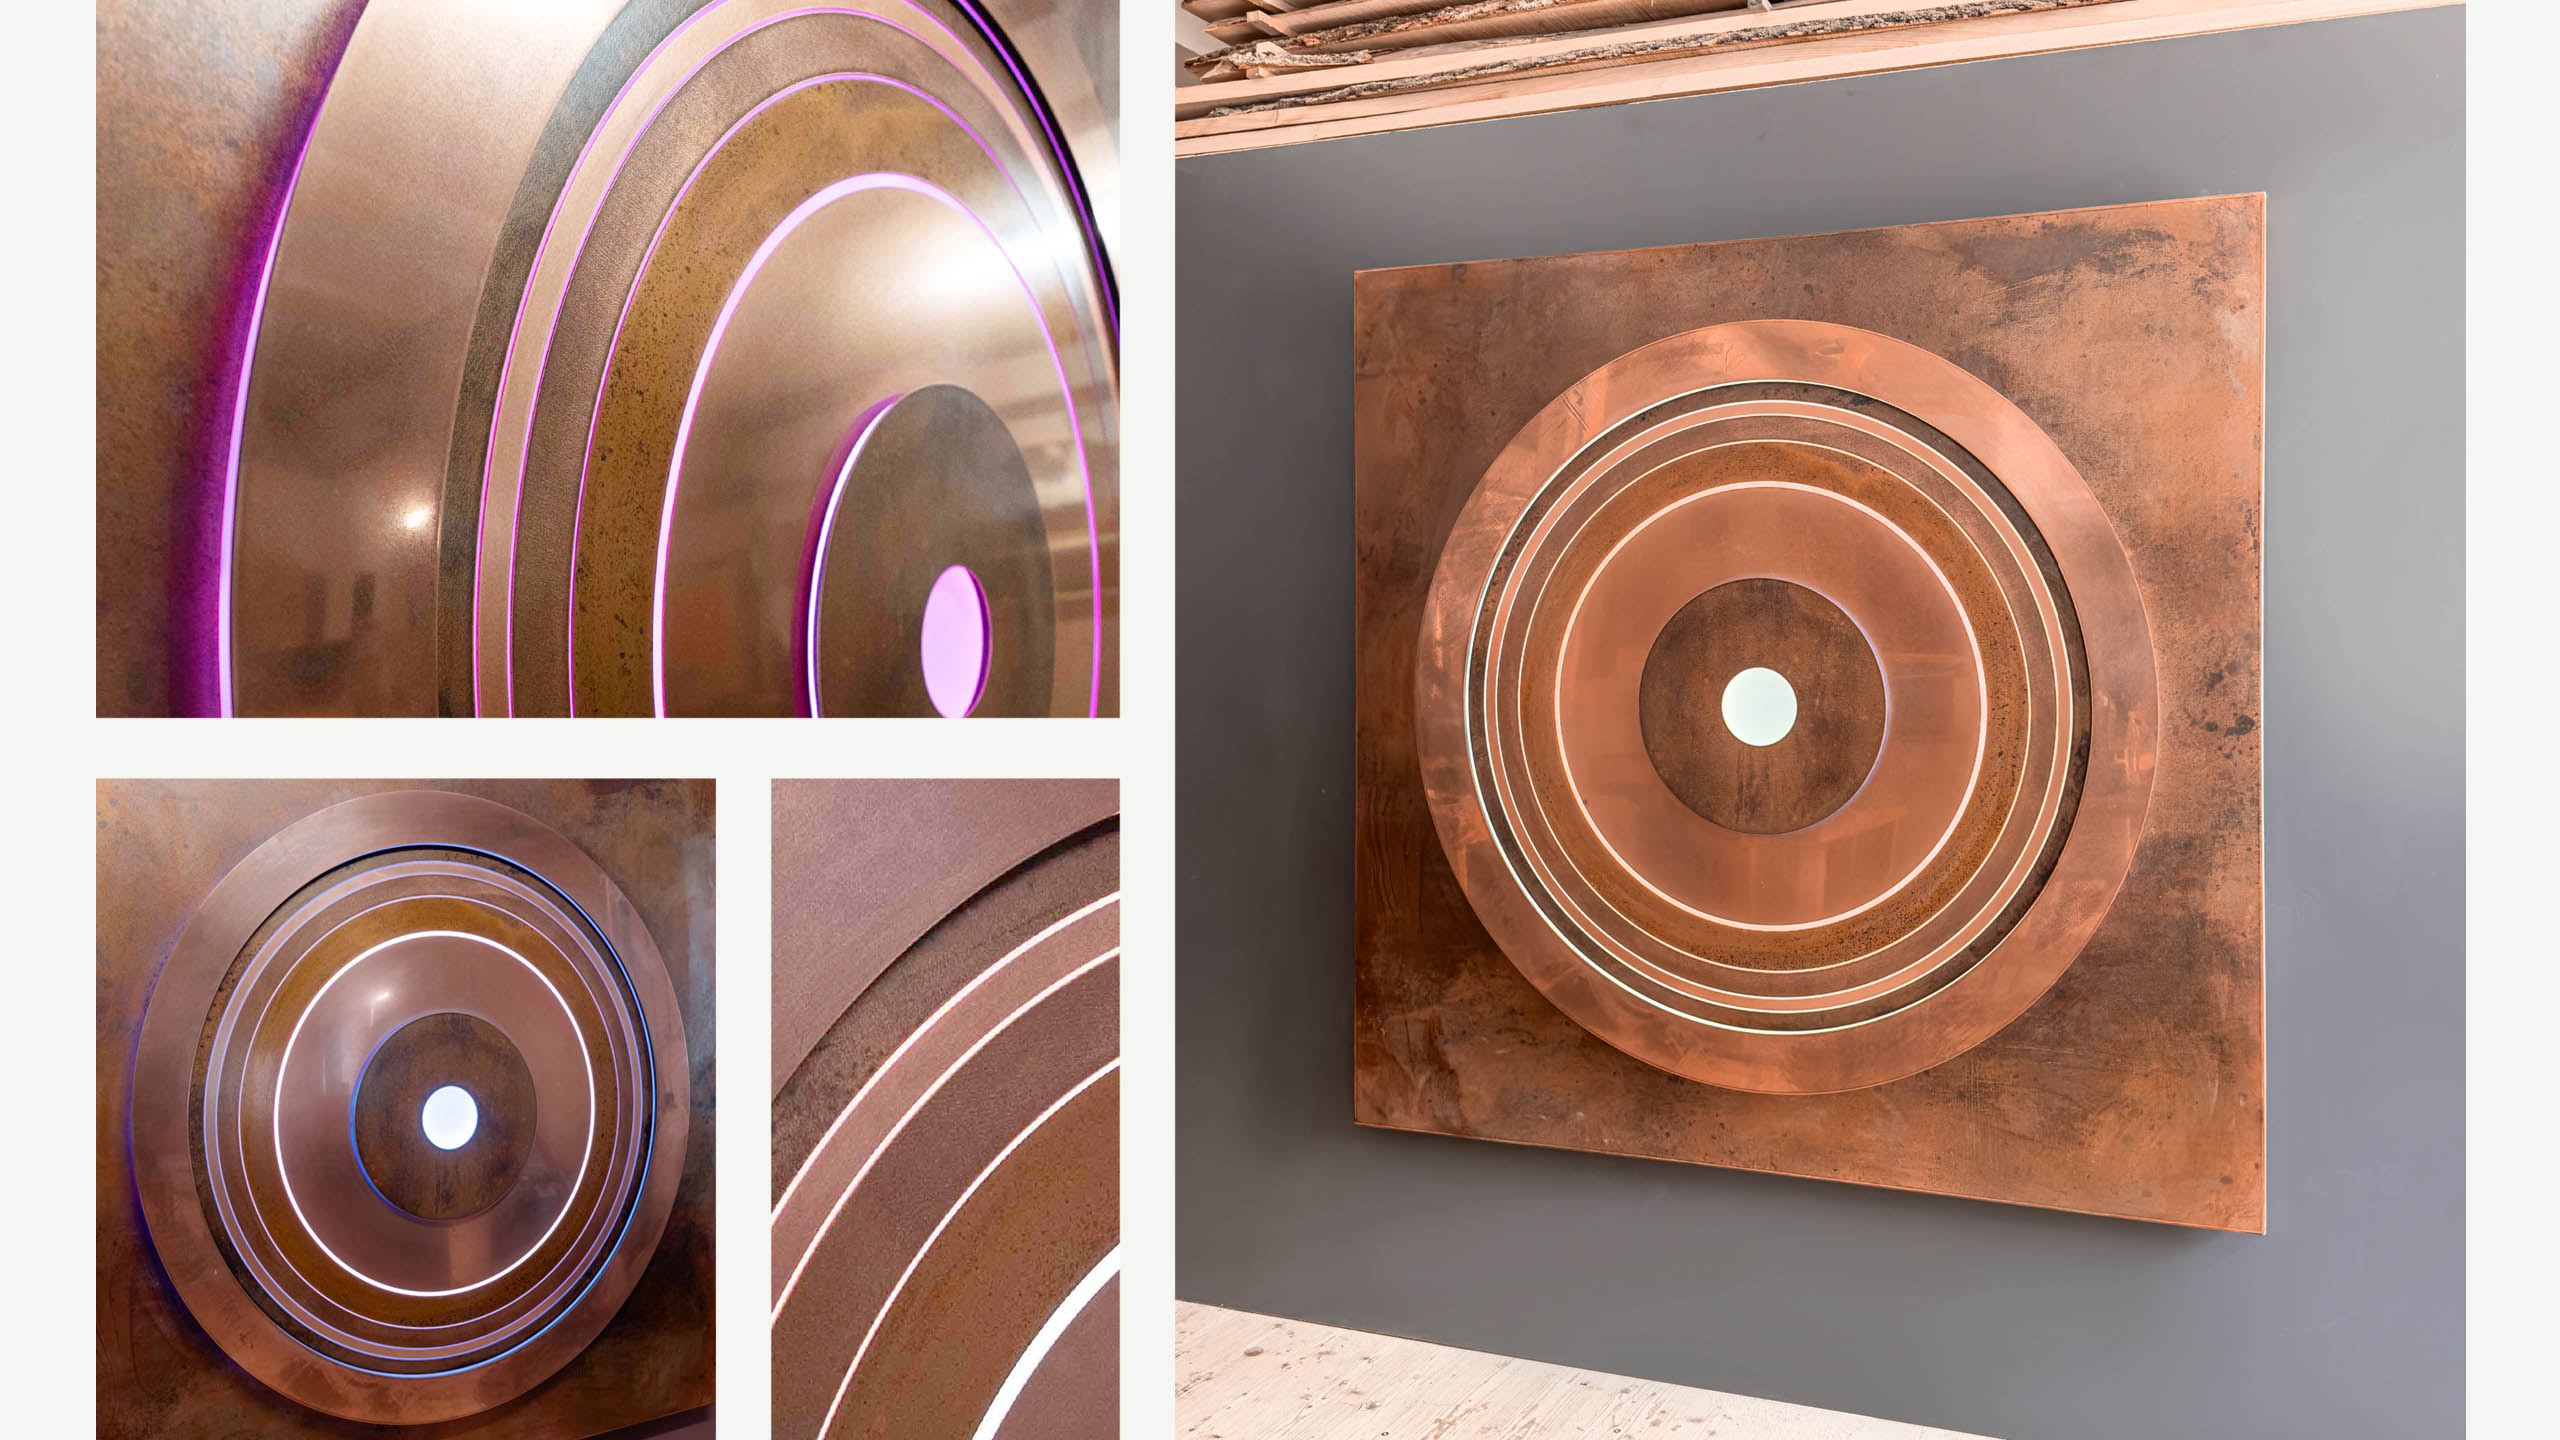 Lumariz-Philipp-Frank-Copper-Light-Art-Limited-Edition-Detail-images od copper structures